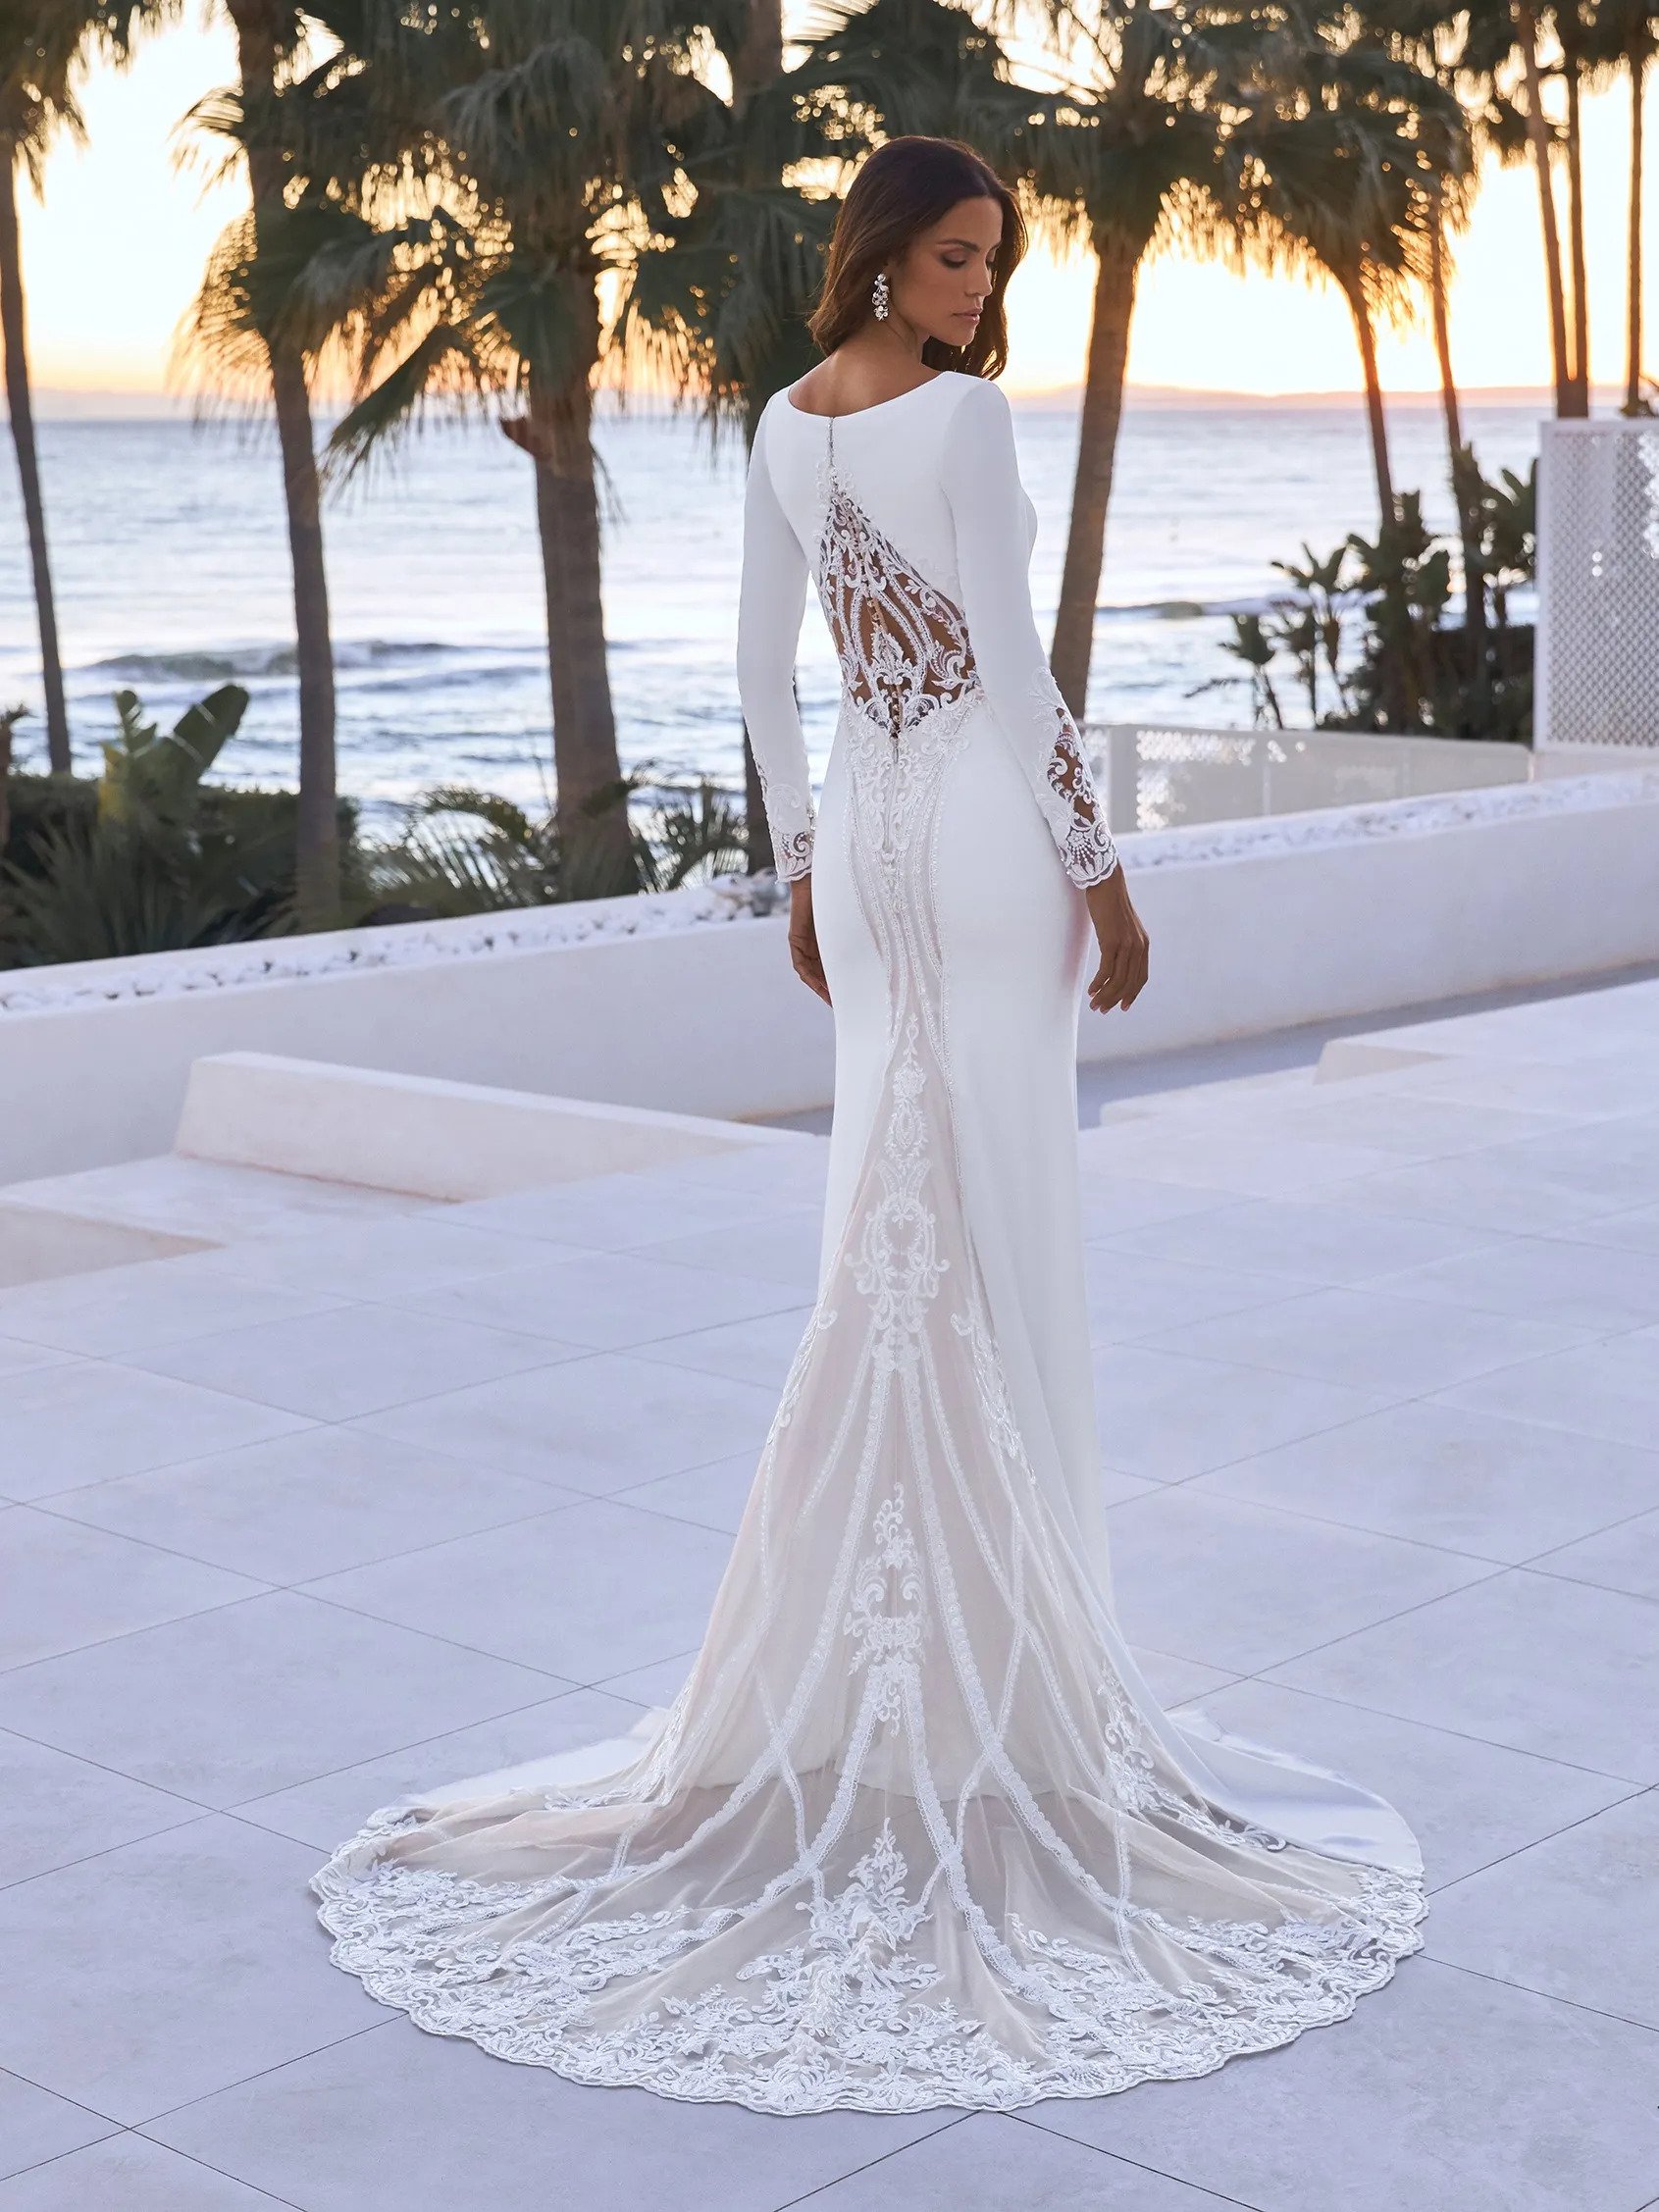 blanc-de-blanc-bridal-boutique-pittsburgh-dress-wedding-gown-sarin.jpg